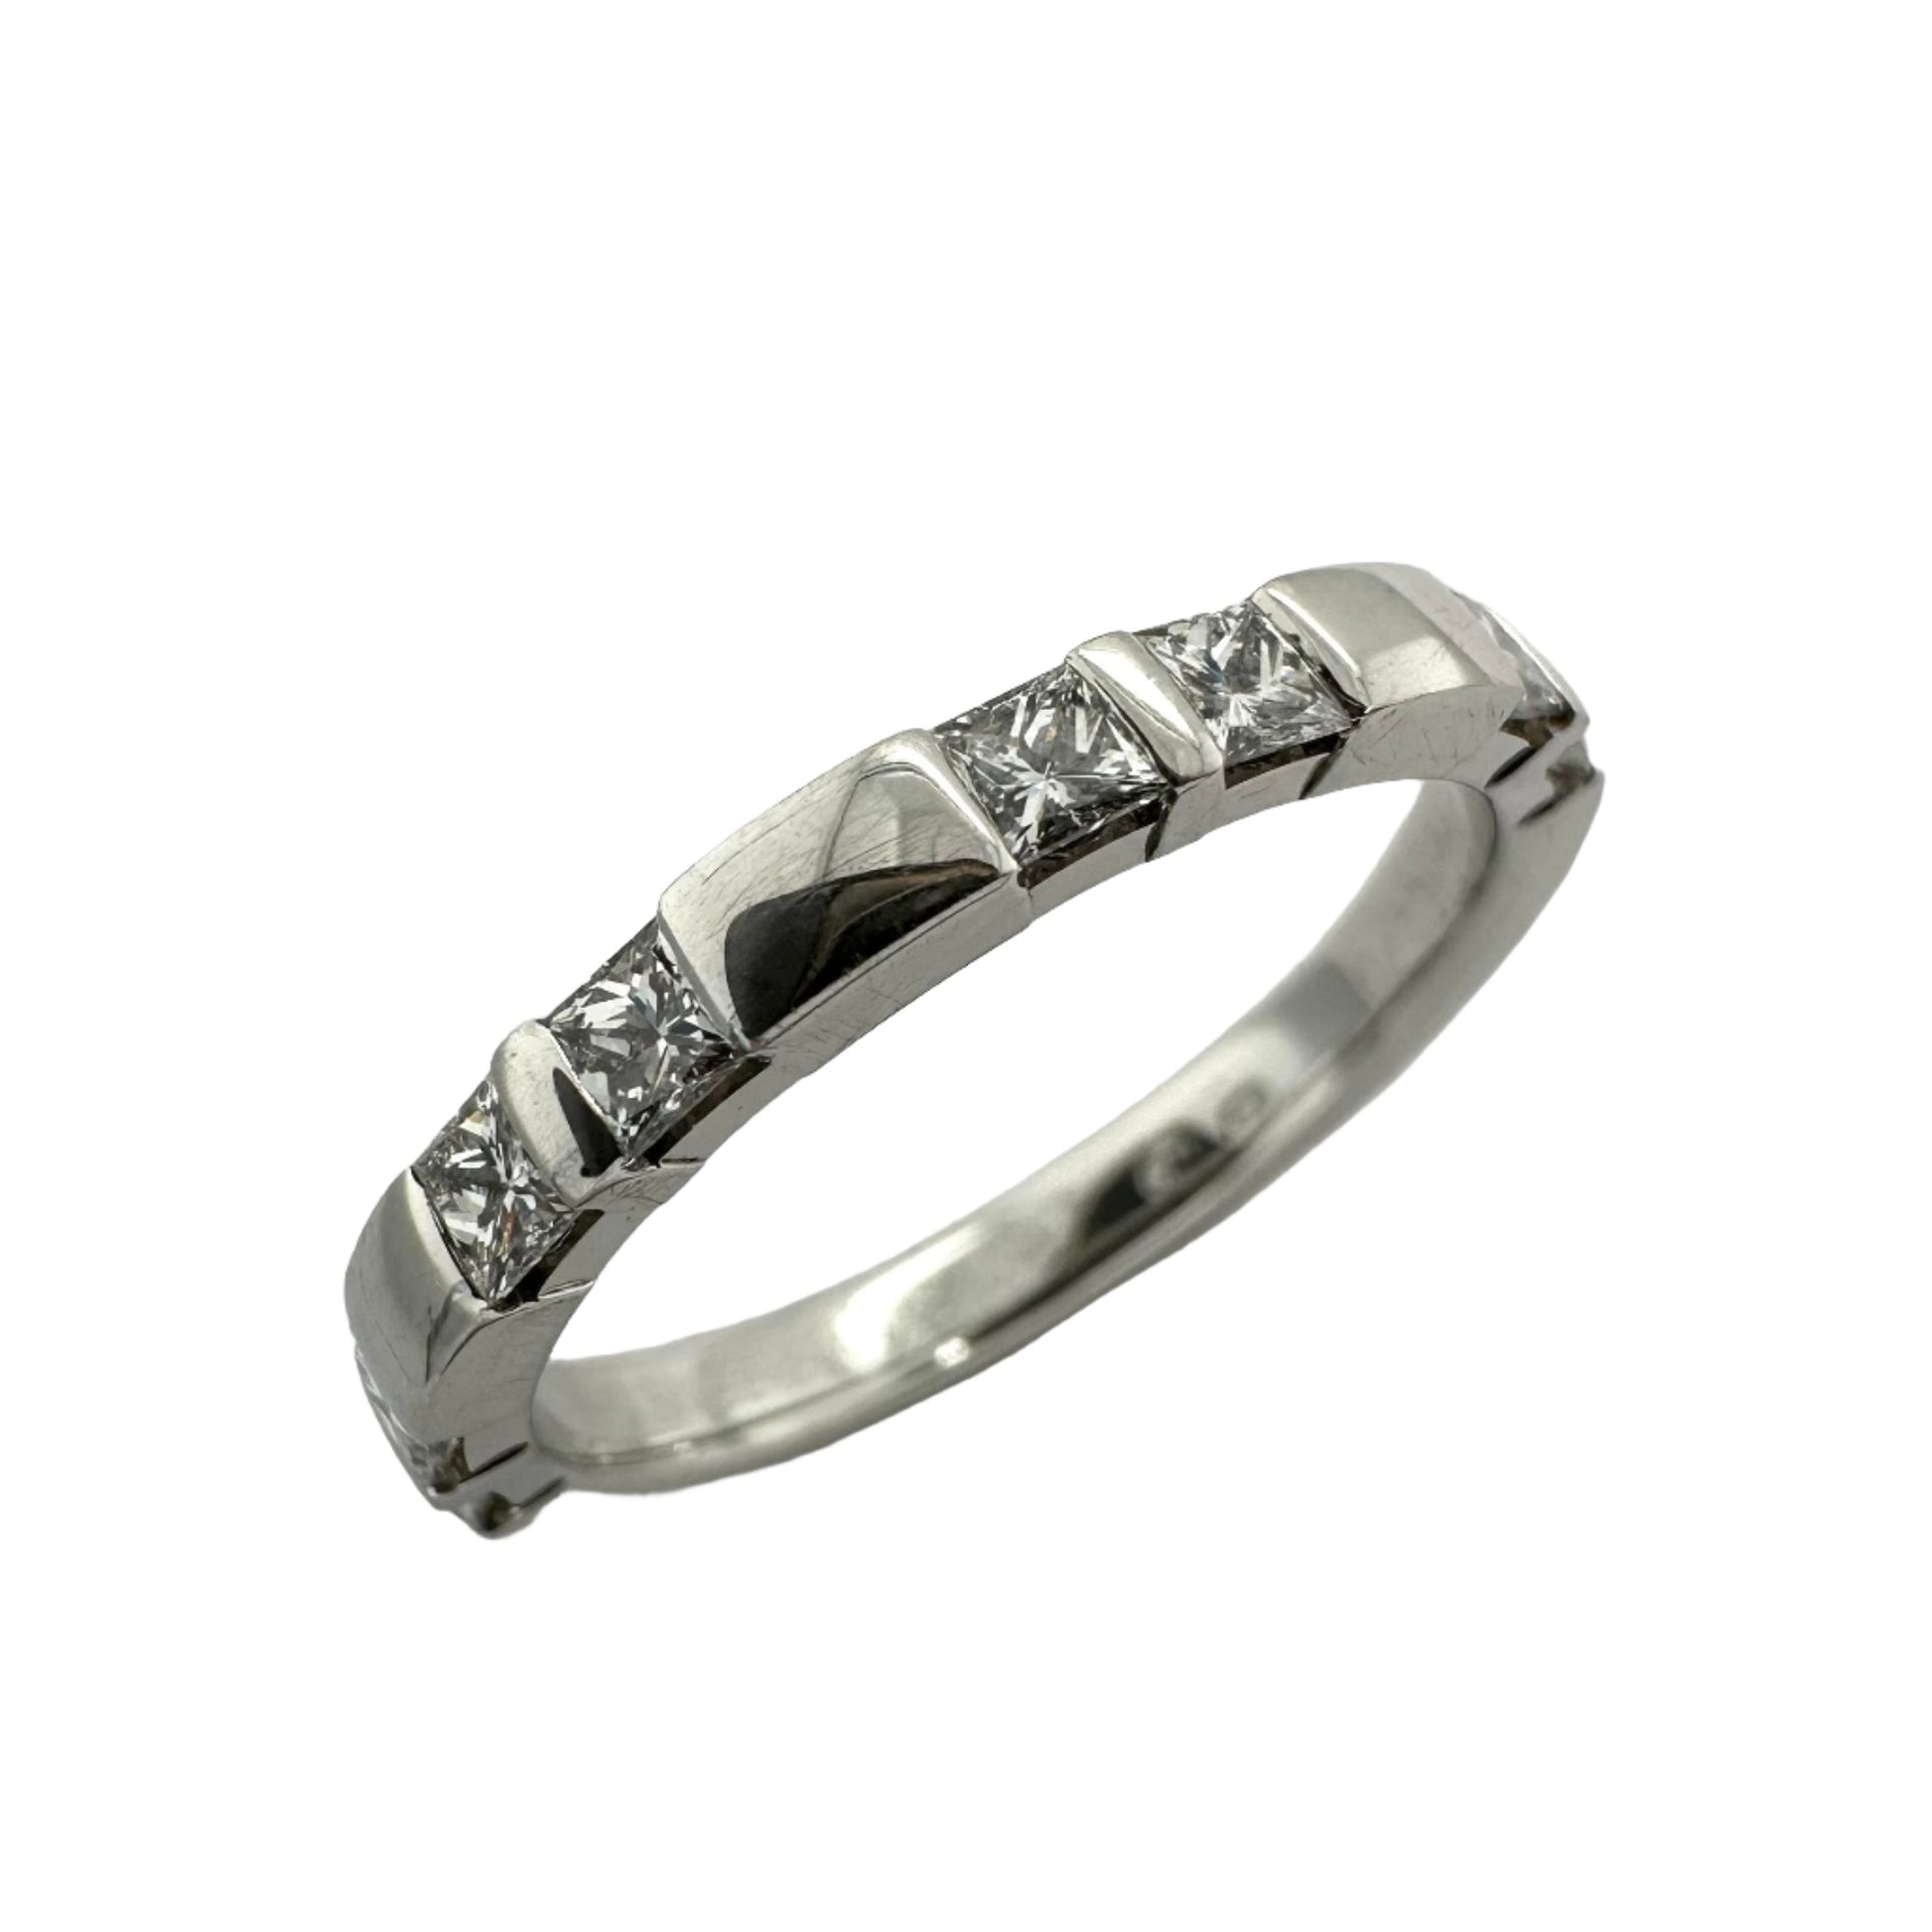  Platinum wedding ring with princess cut diamonds.